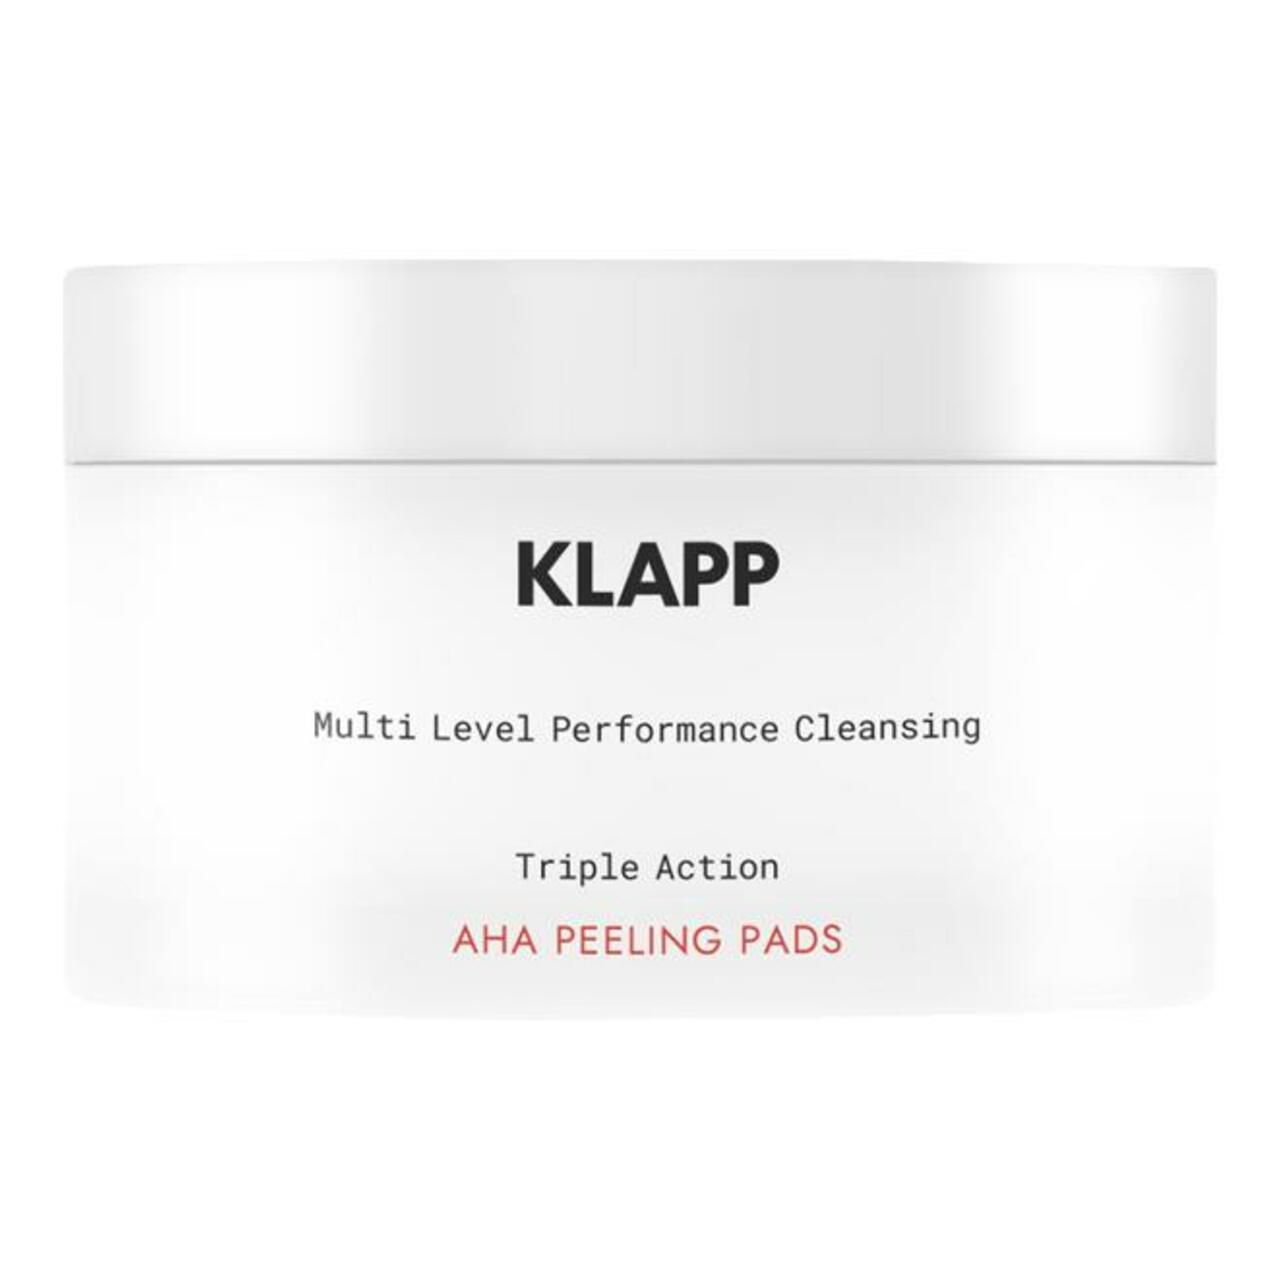 Klapp, Multi Level Performance Cleansing AHA Peeling Pads